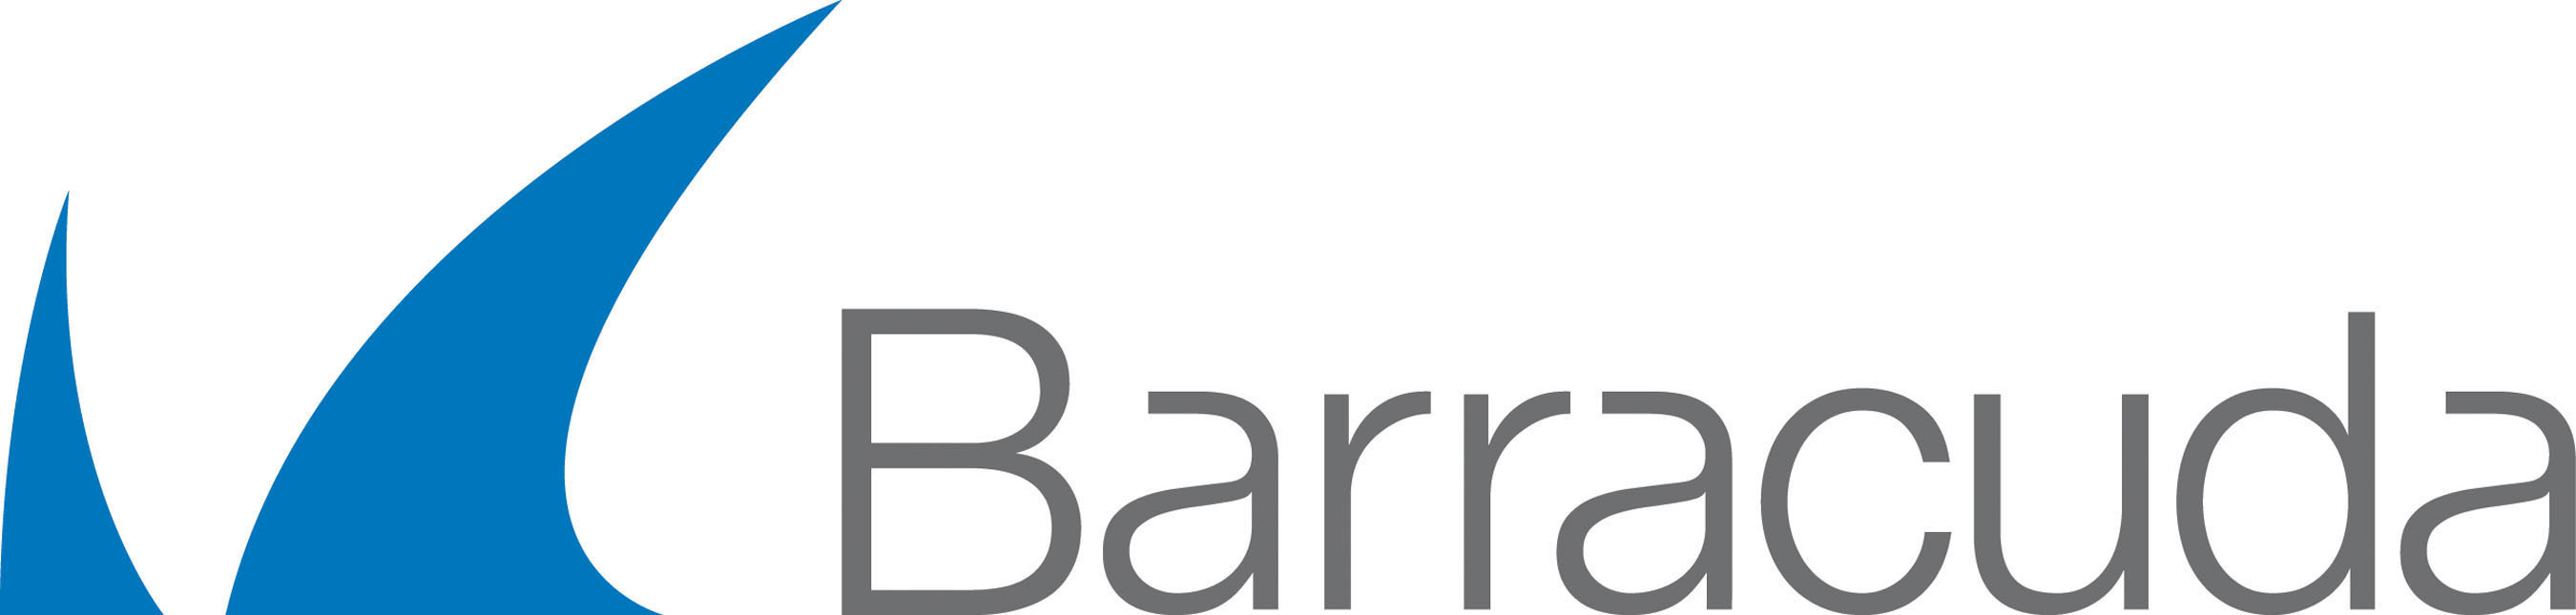 Barracuda NextGen Firewall Malware Protection For Amazon Web Services Level 2 - 1 Year